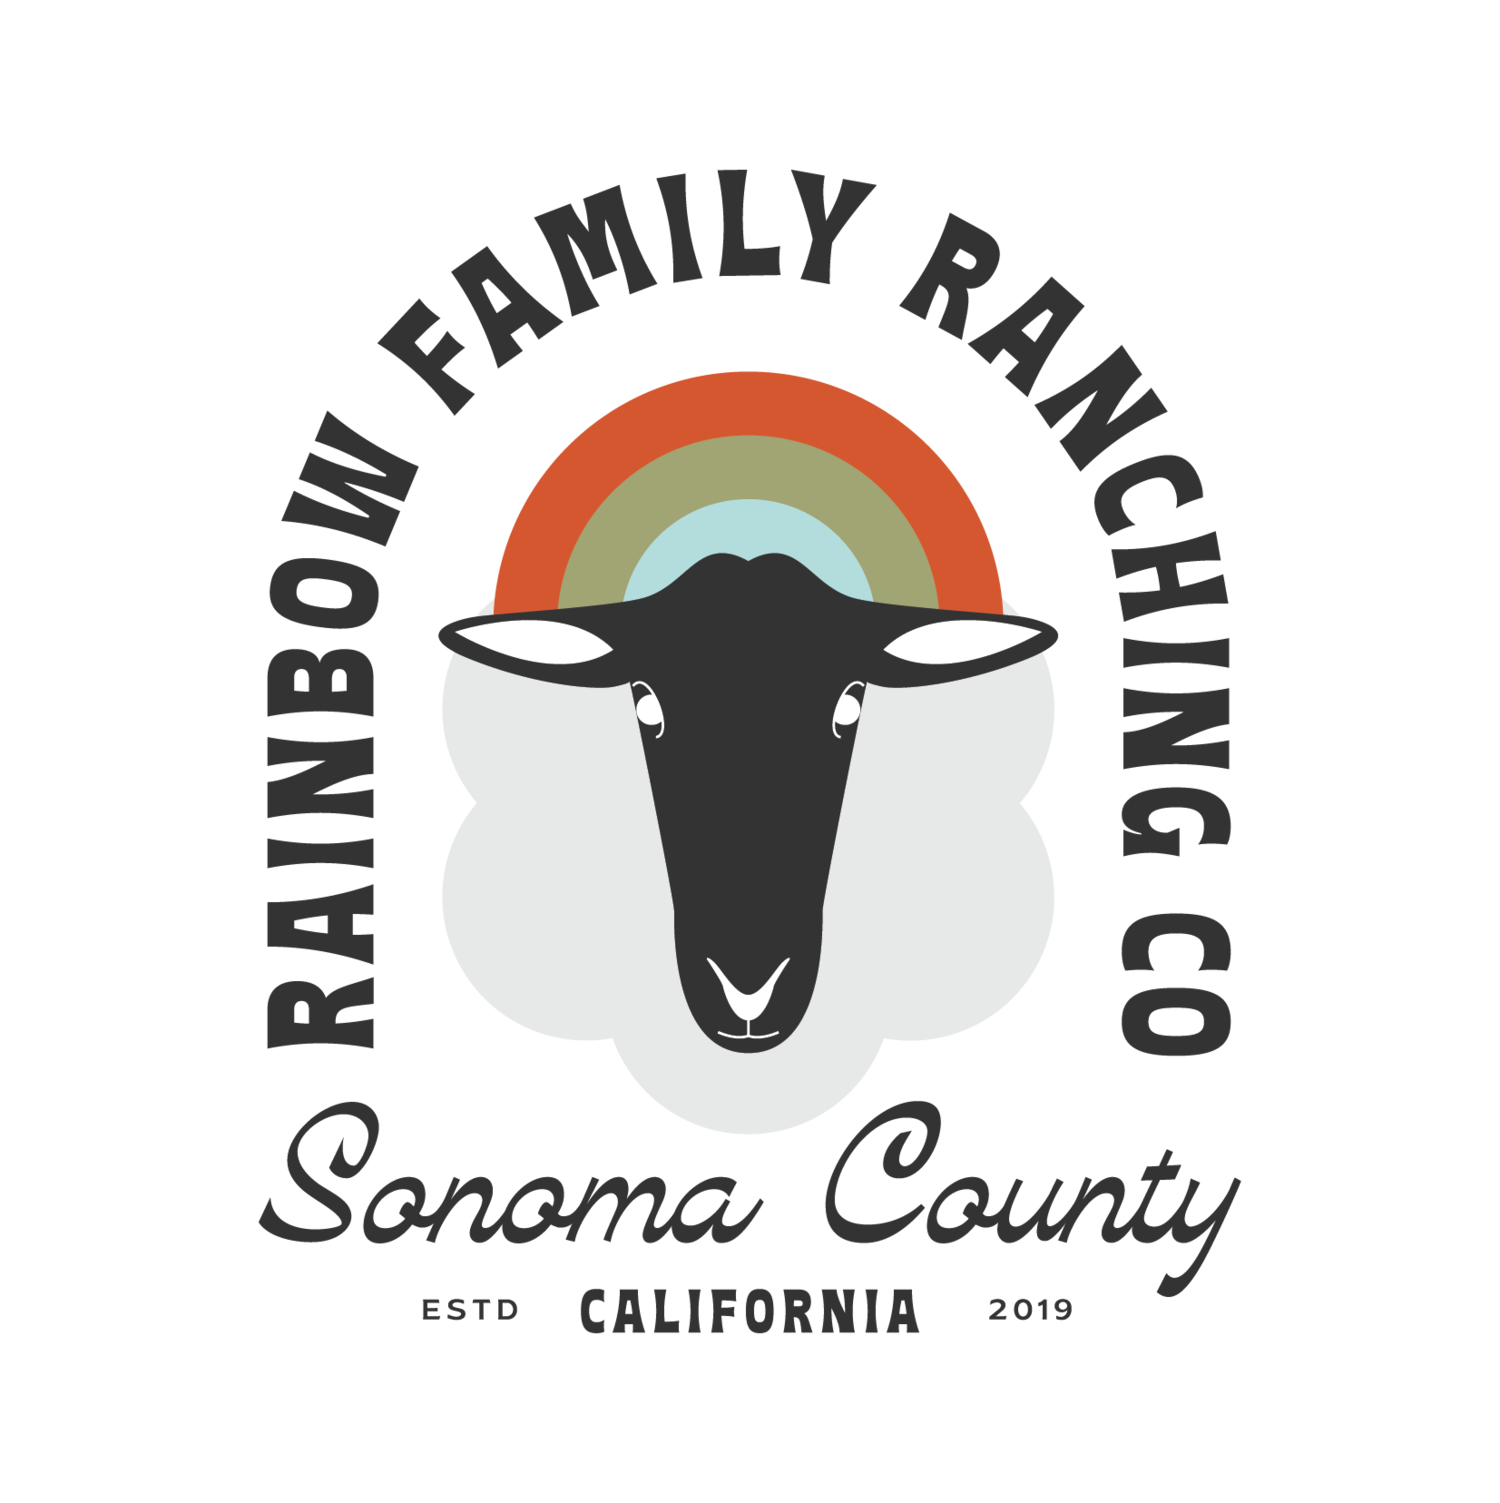 Rainbow Family Ranching